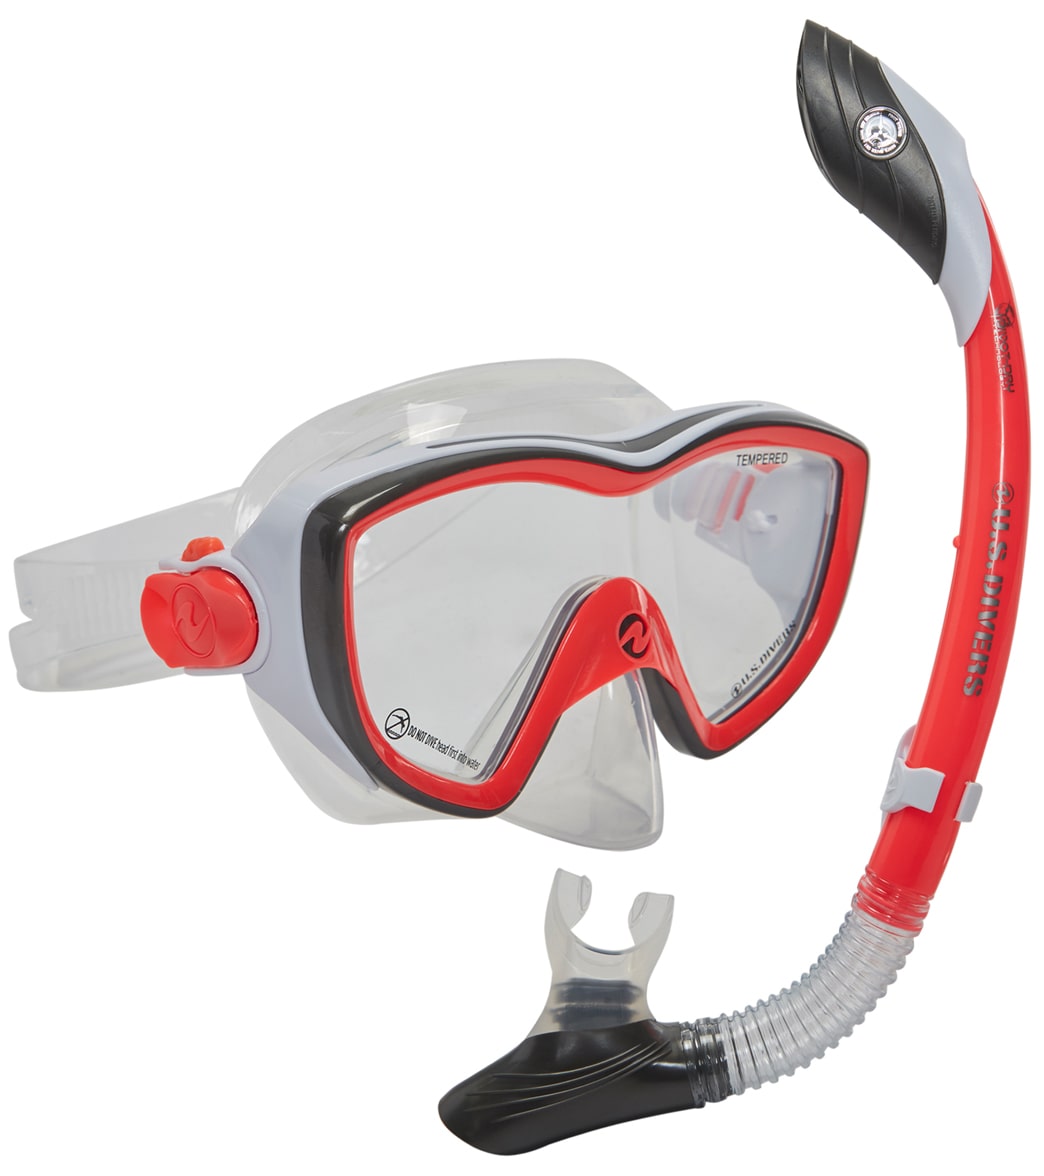 U.s. Divers Diva Ii Lx / Island Dry Mask And Snorkel Set - Bright Pink/Black - Swimoutlet.com